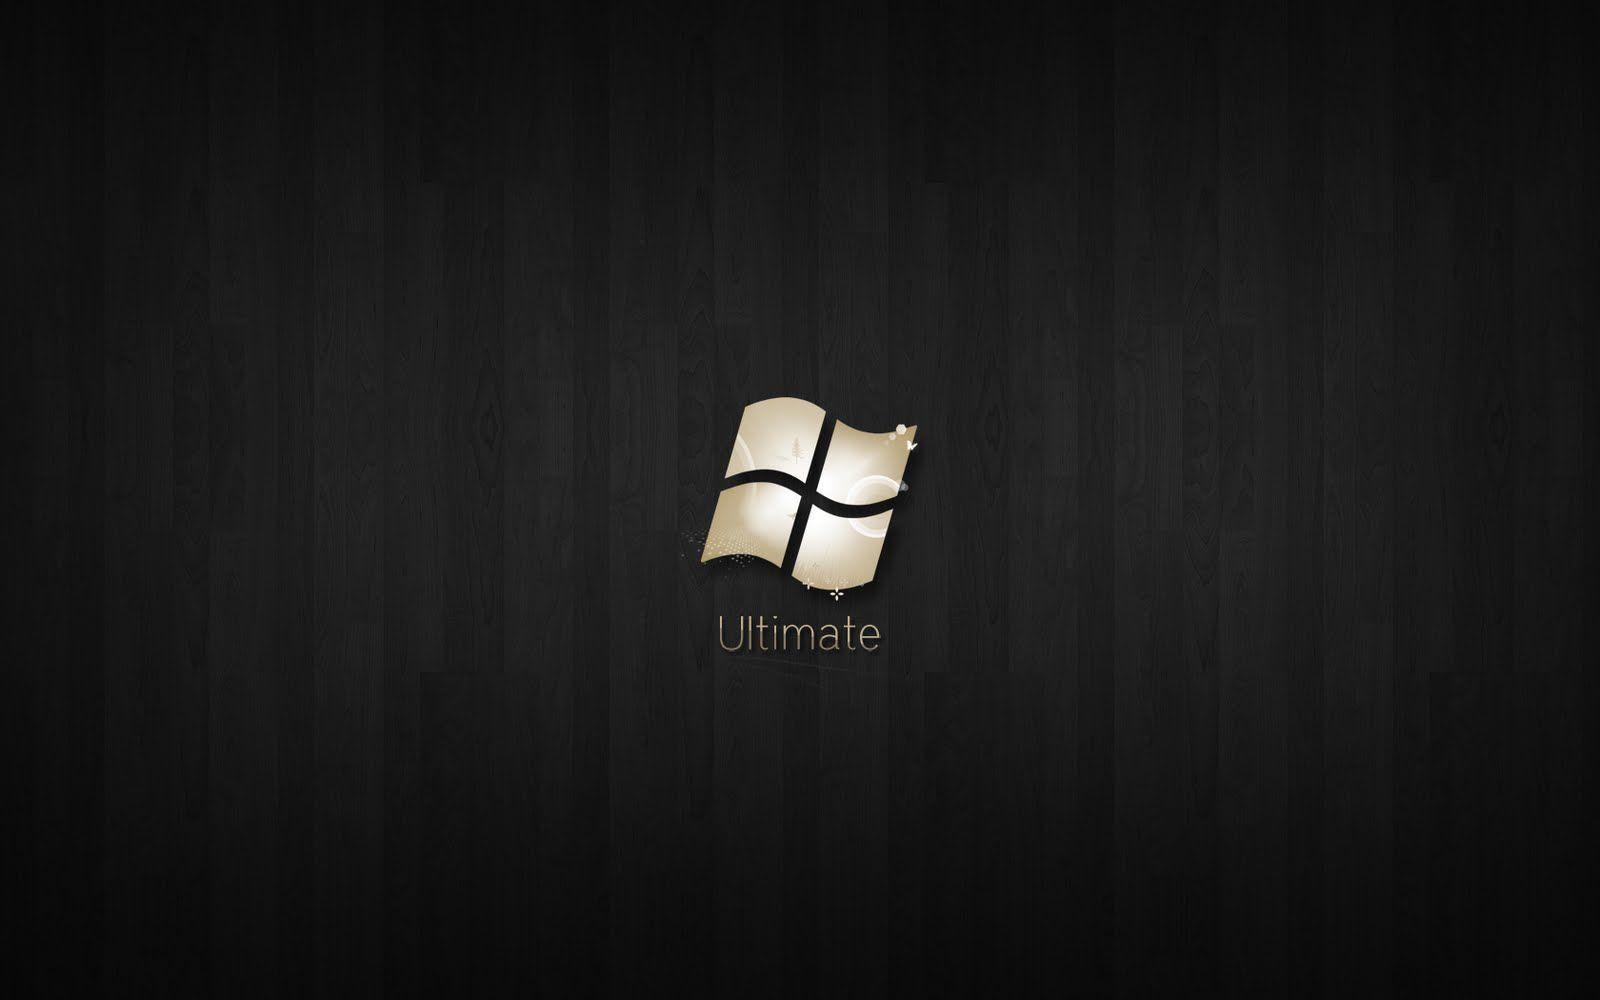 Windows 7 Ultimate HD Wallpaper